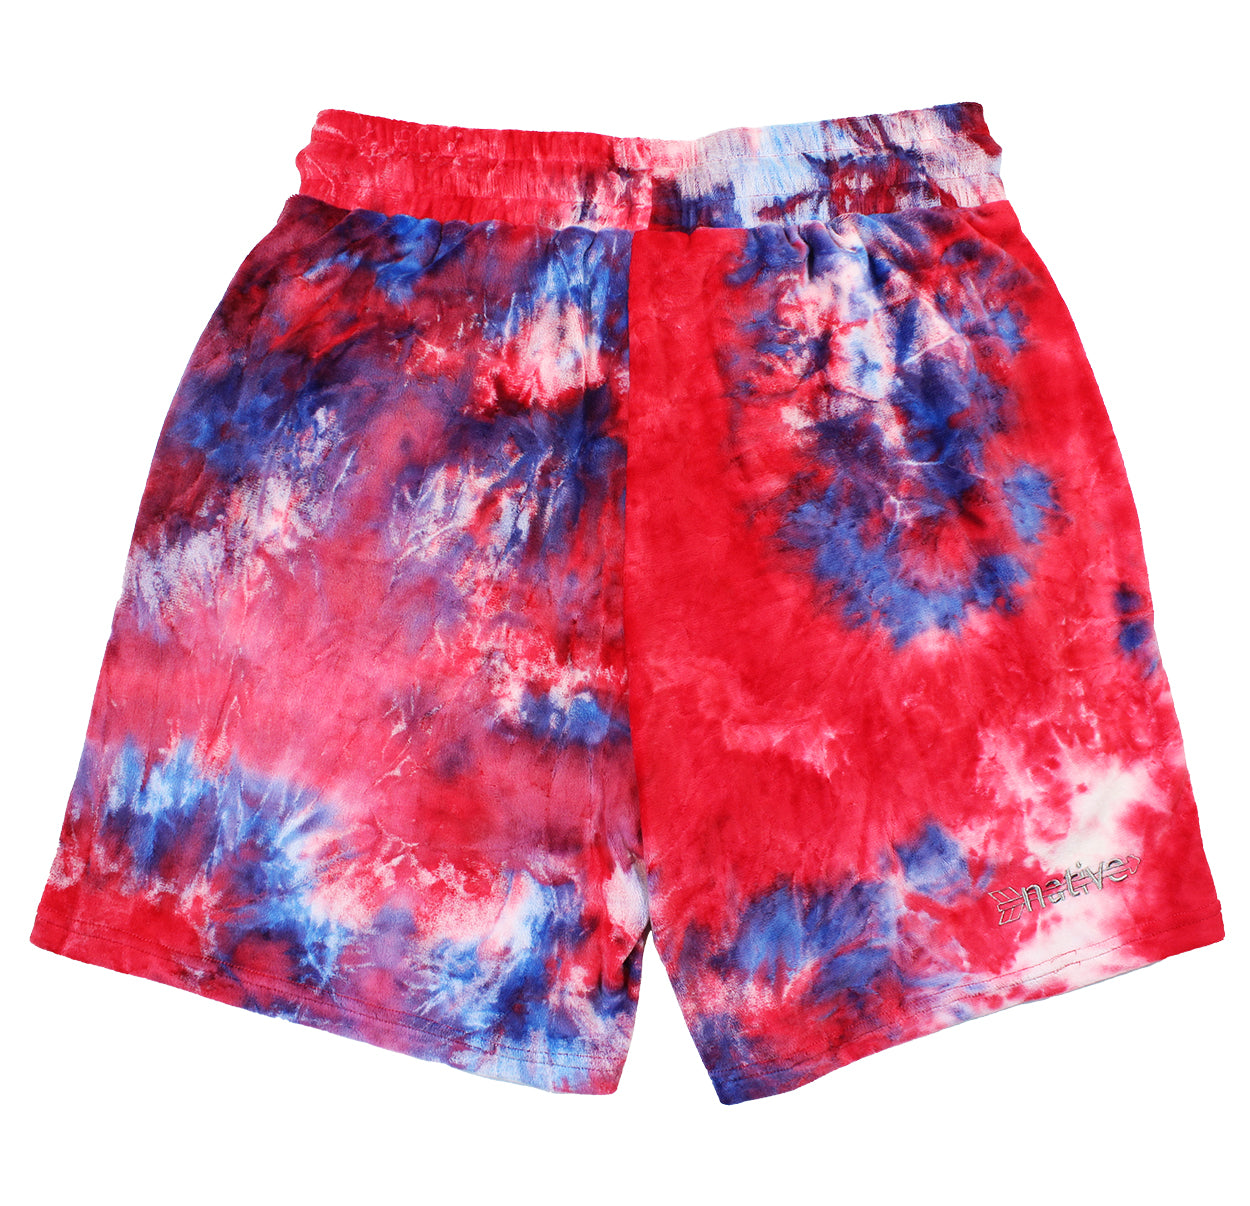 tie dye velour shorts in red/white/blue